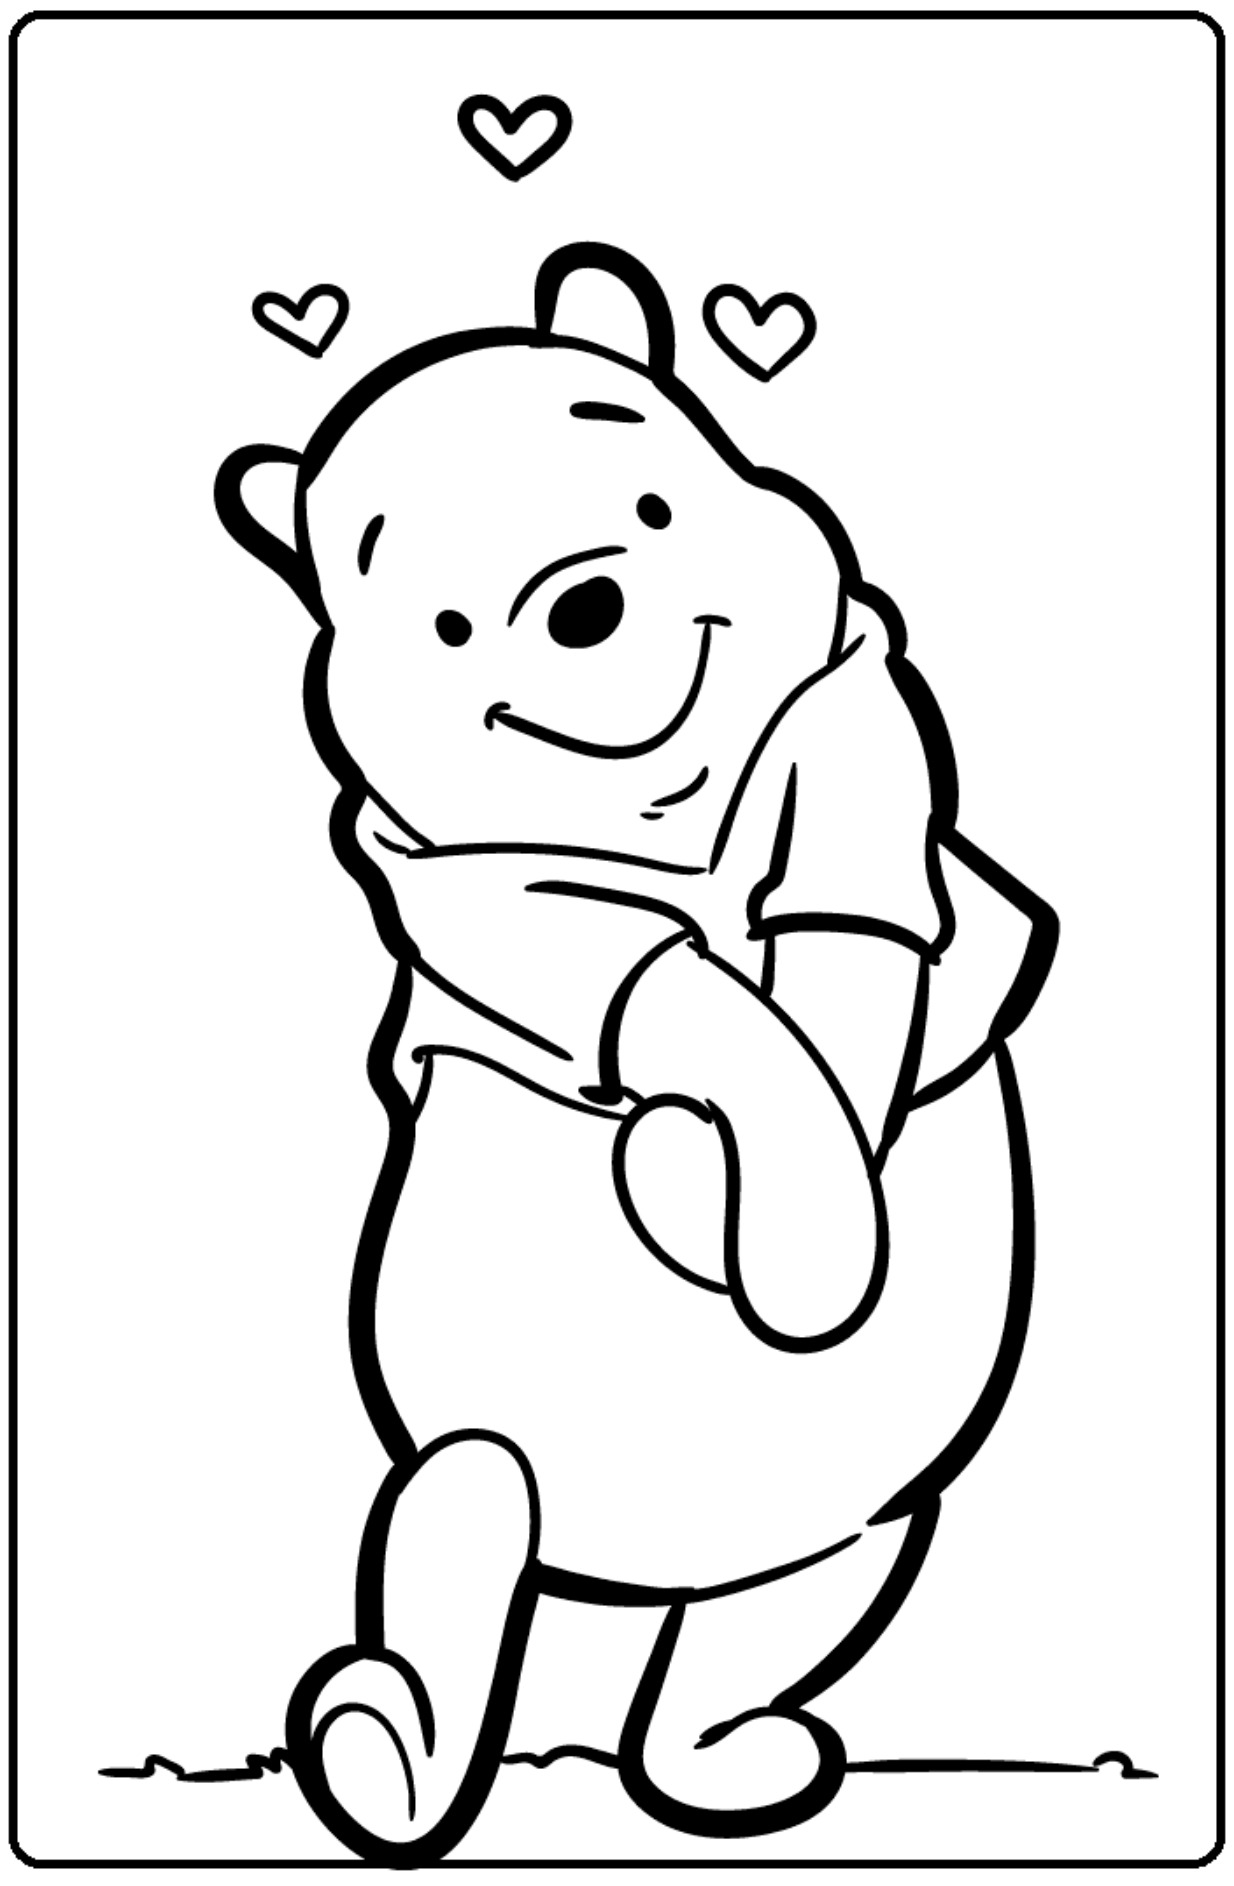 Winnie The Pooh Hearts painting page - SheetalColor.com